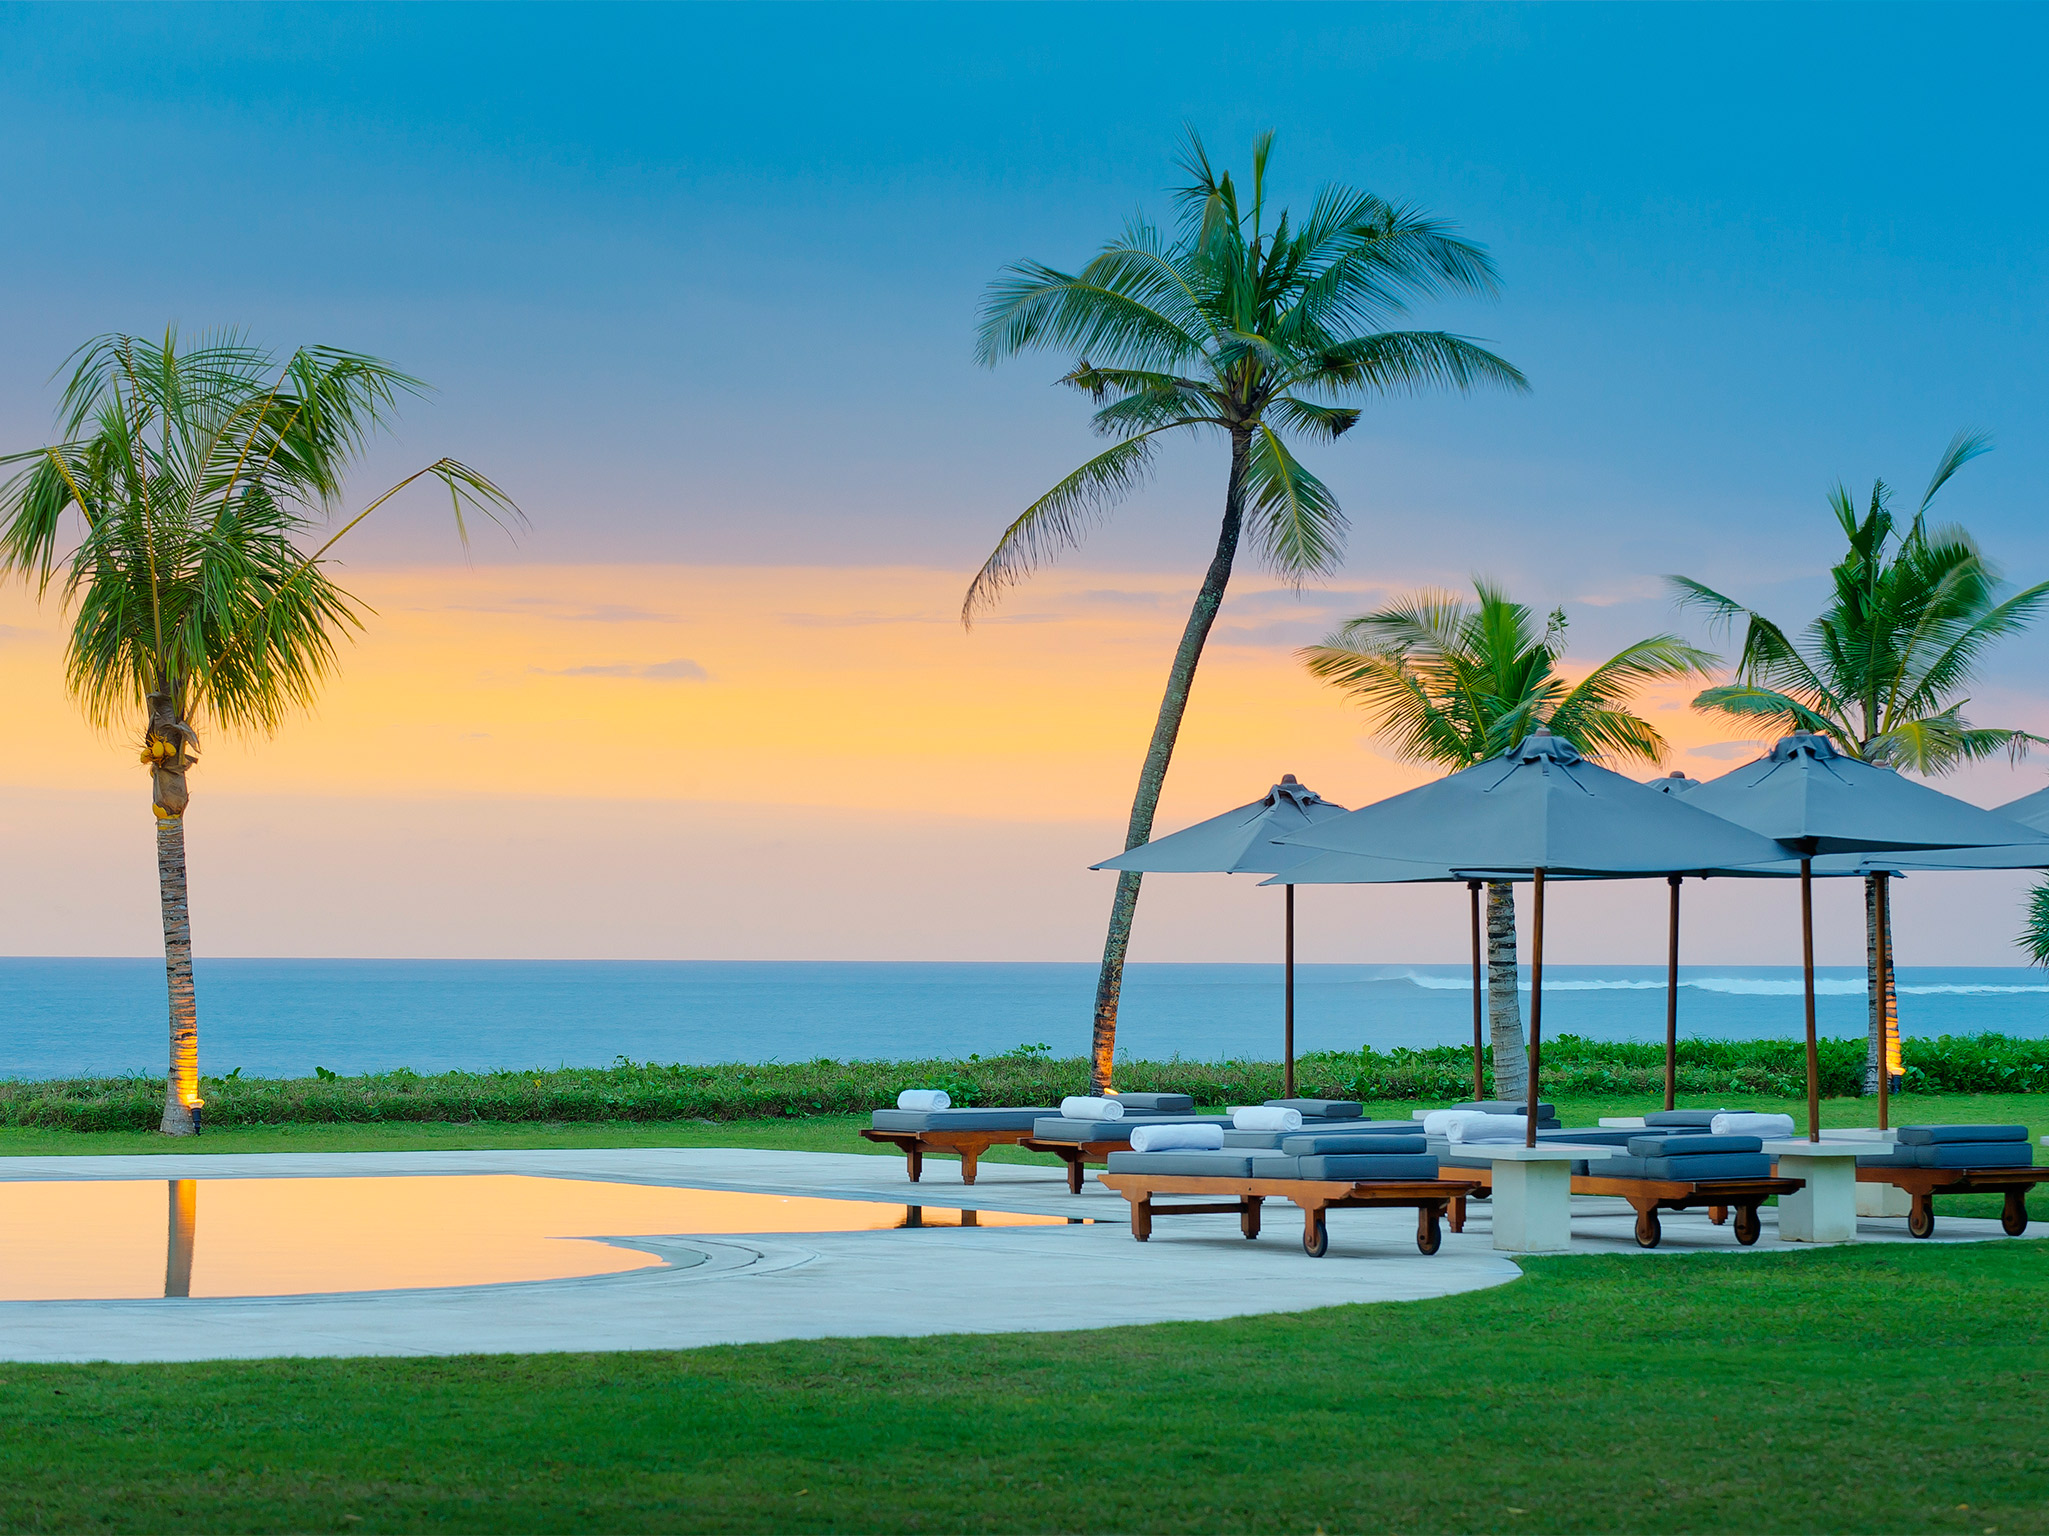 Atas Ombak - Sunset over the pool - Villa Atas Ombak, Seminyak, Bali